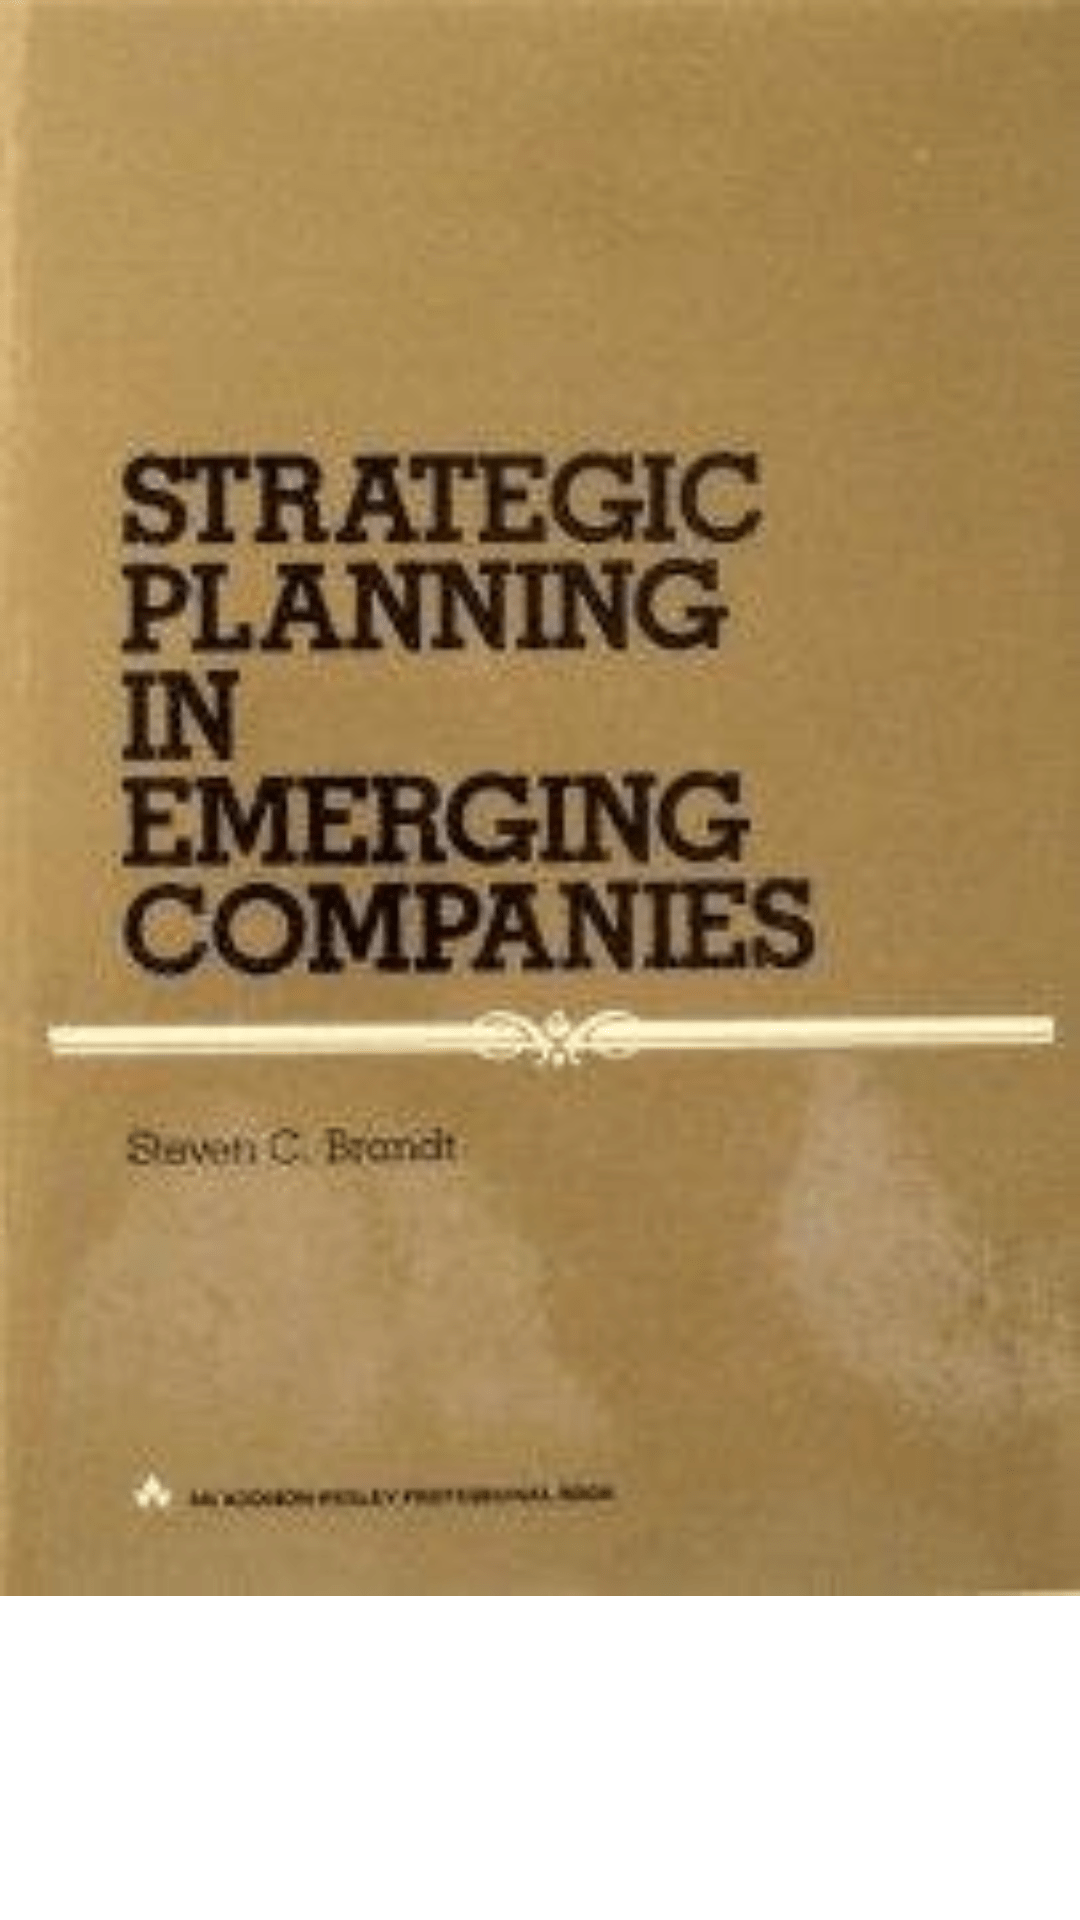 Strategic Planning in Emerging Companies by Steven C. Brandt